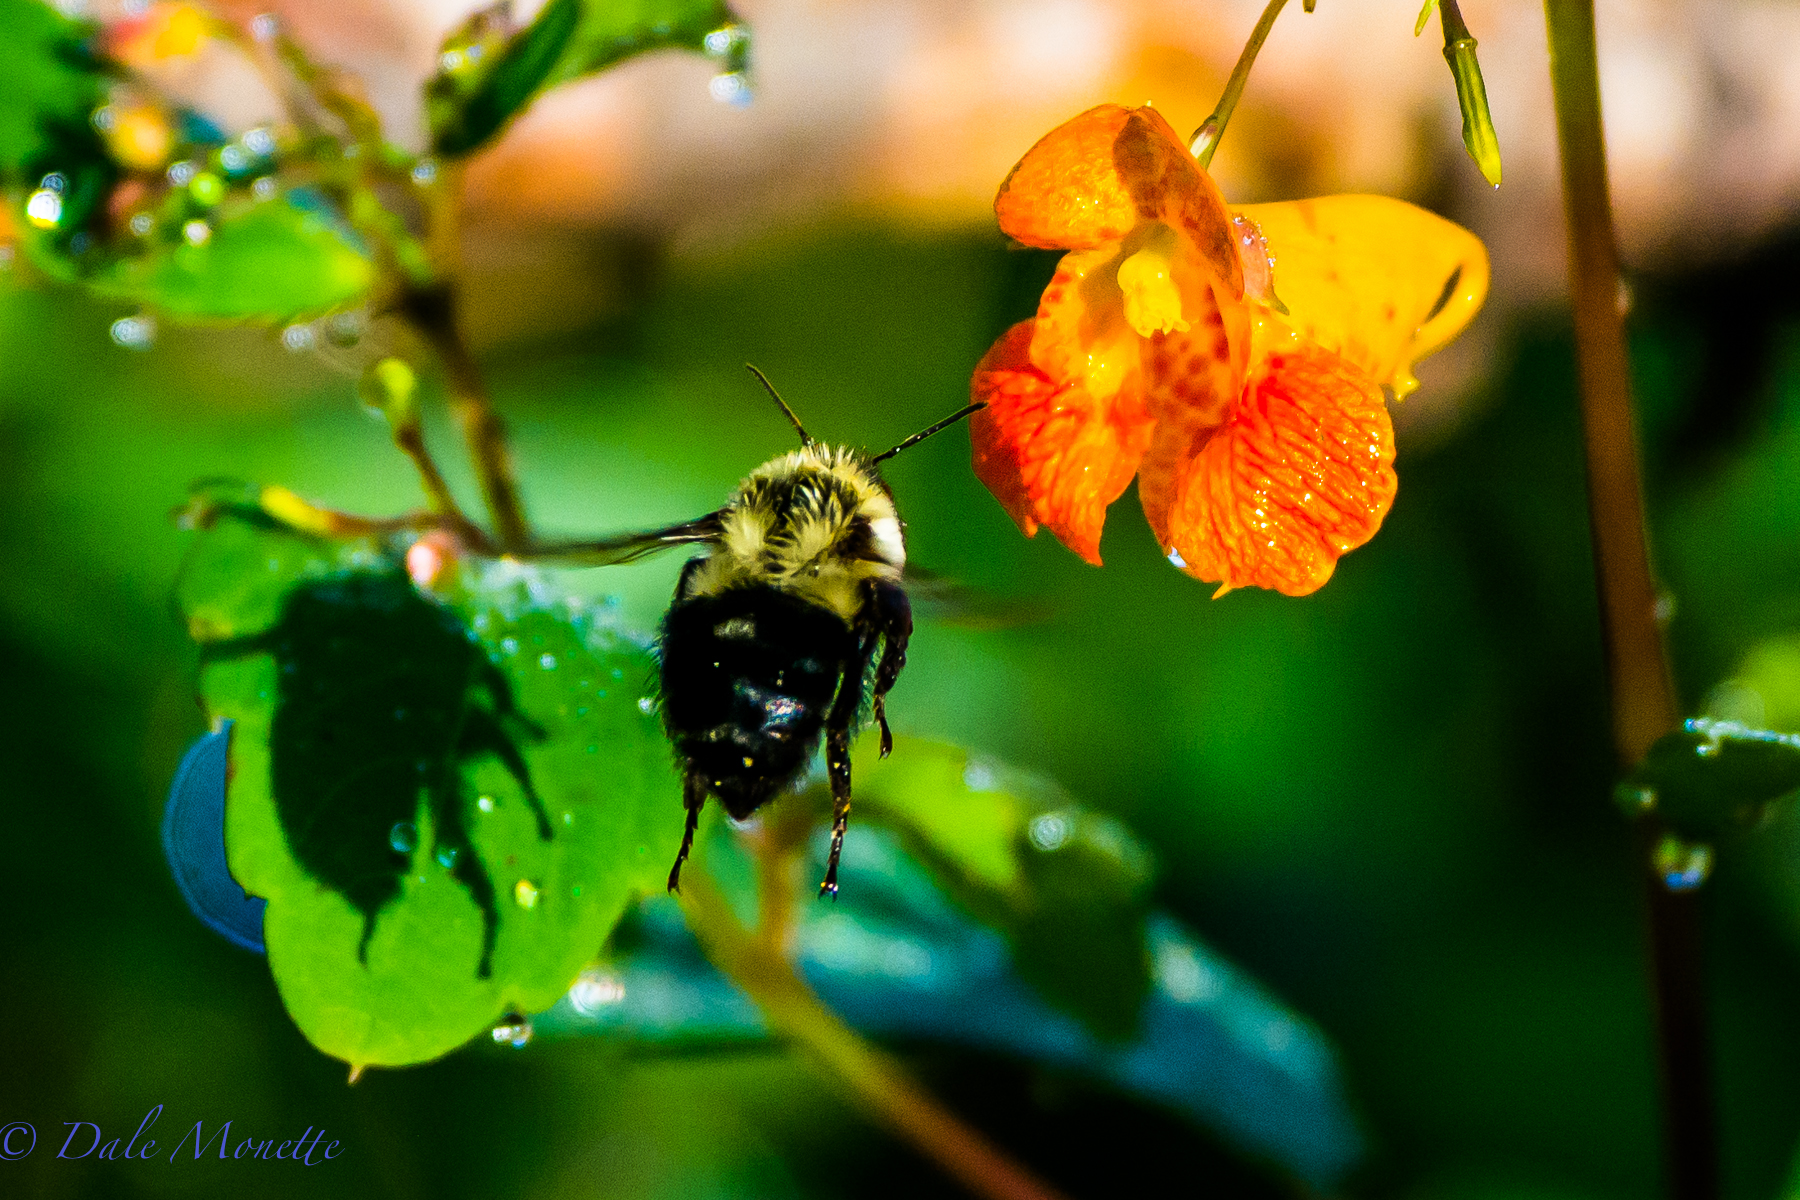 Bumble bee buzzing